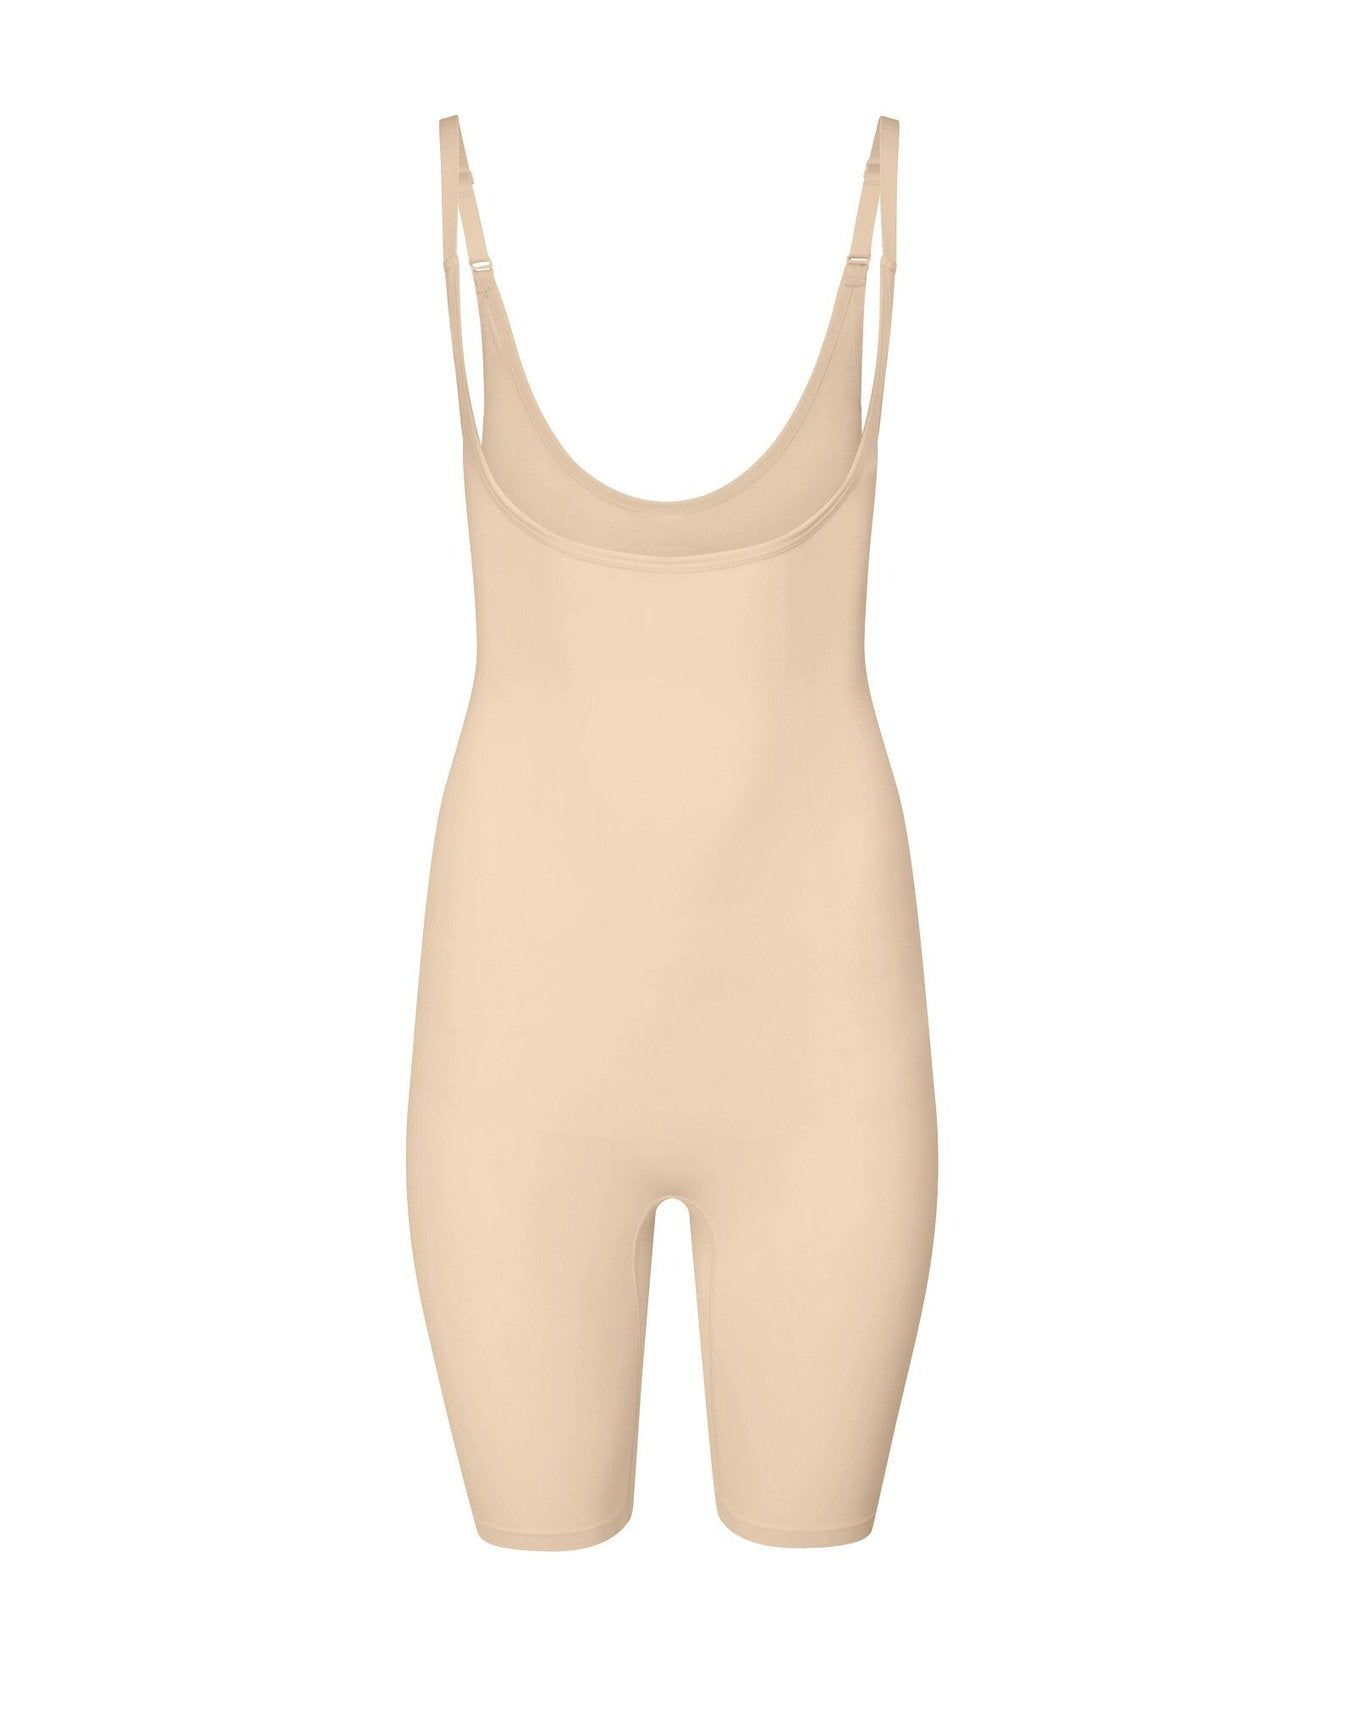 nueskin Braelynn High-Compression Underbust Bodysuit in color Dawn and shape bodysuit